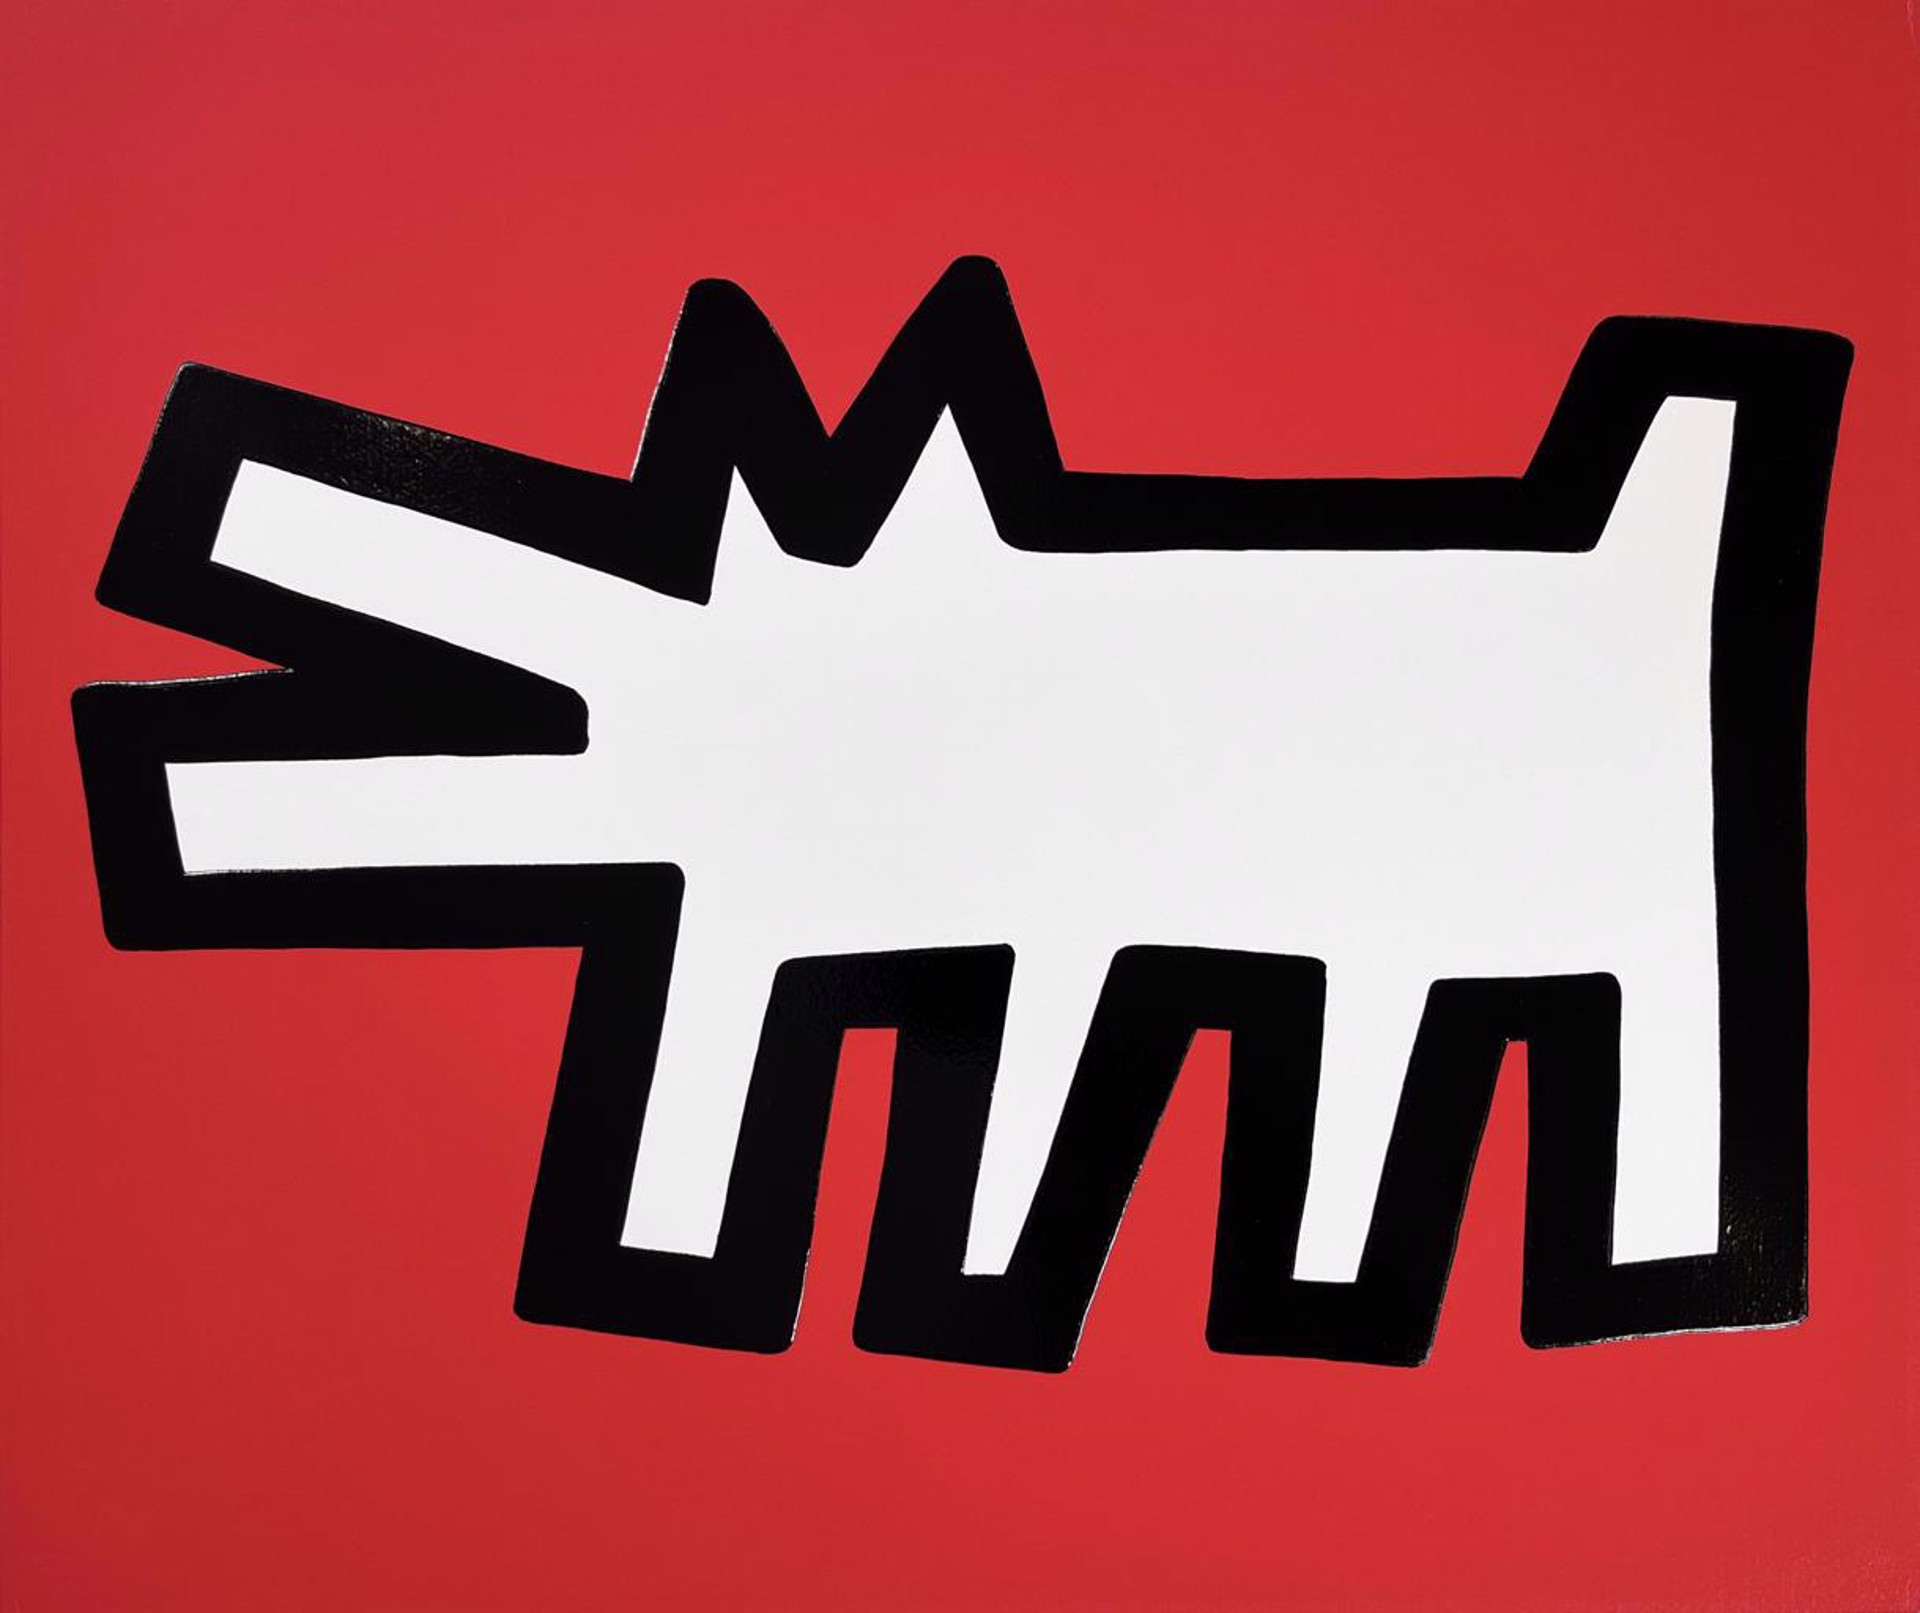 Icons (B) - Barking Dog by Keith Haring